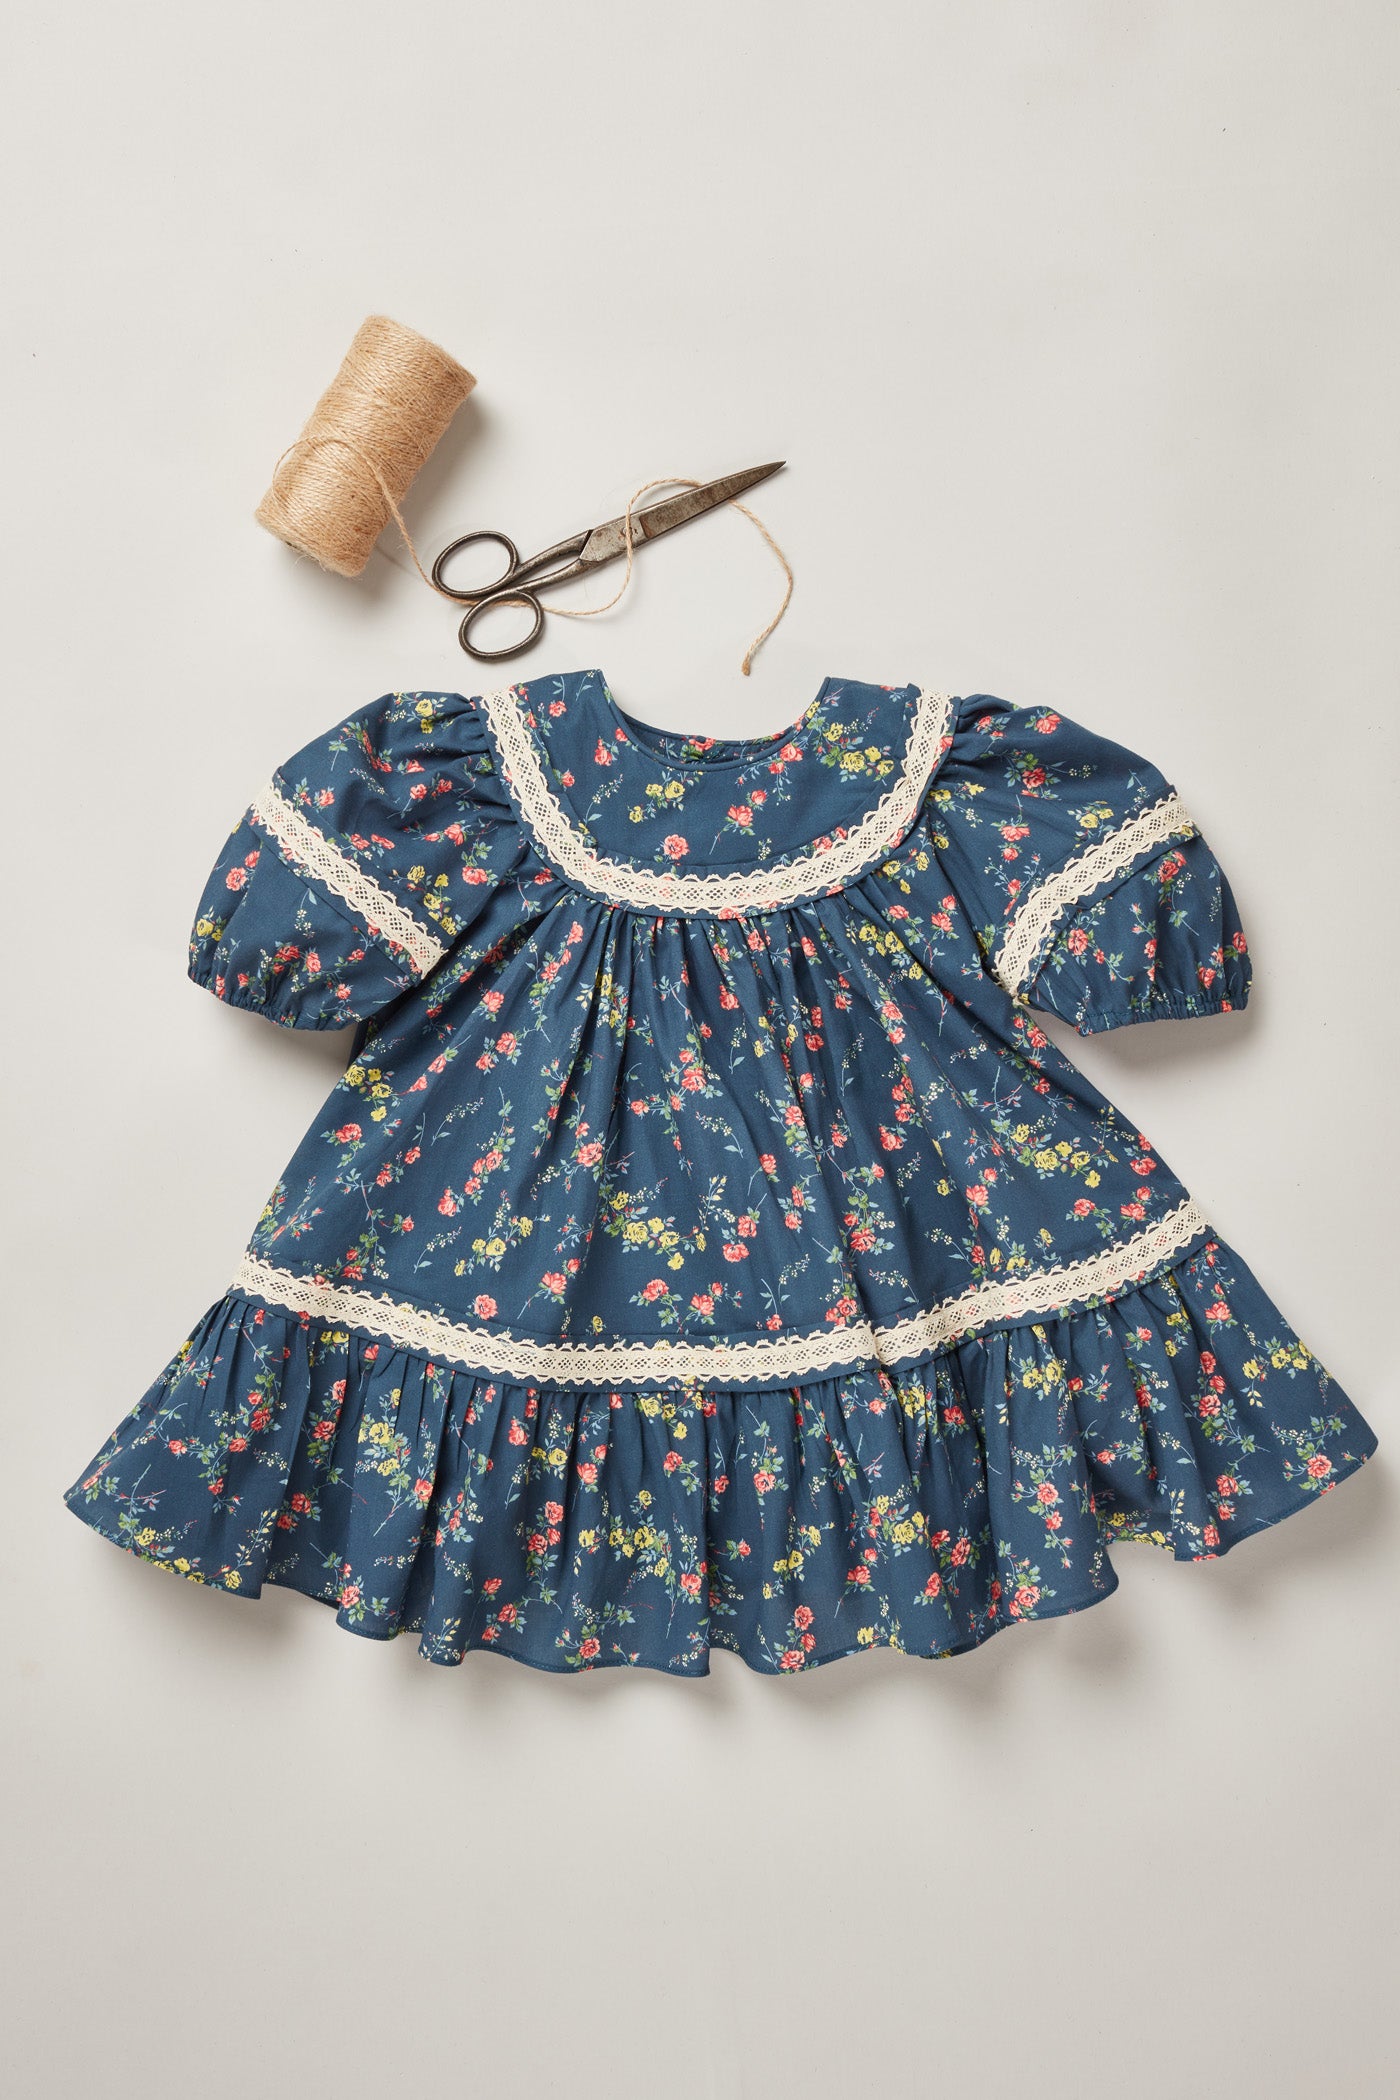 Baby Plumcake Dress in Blue Rose Garden